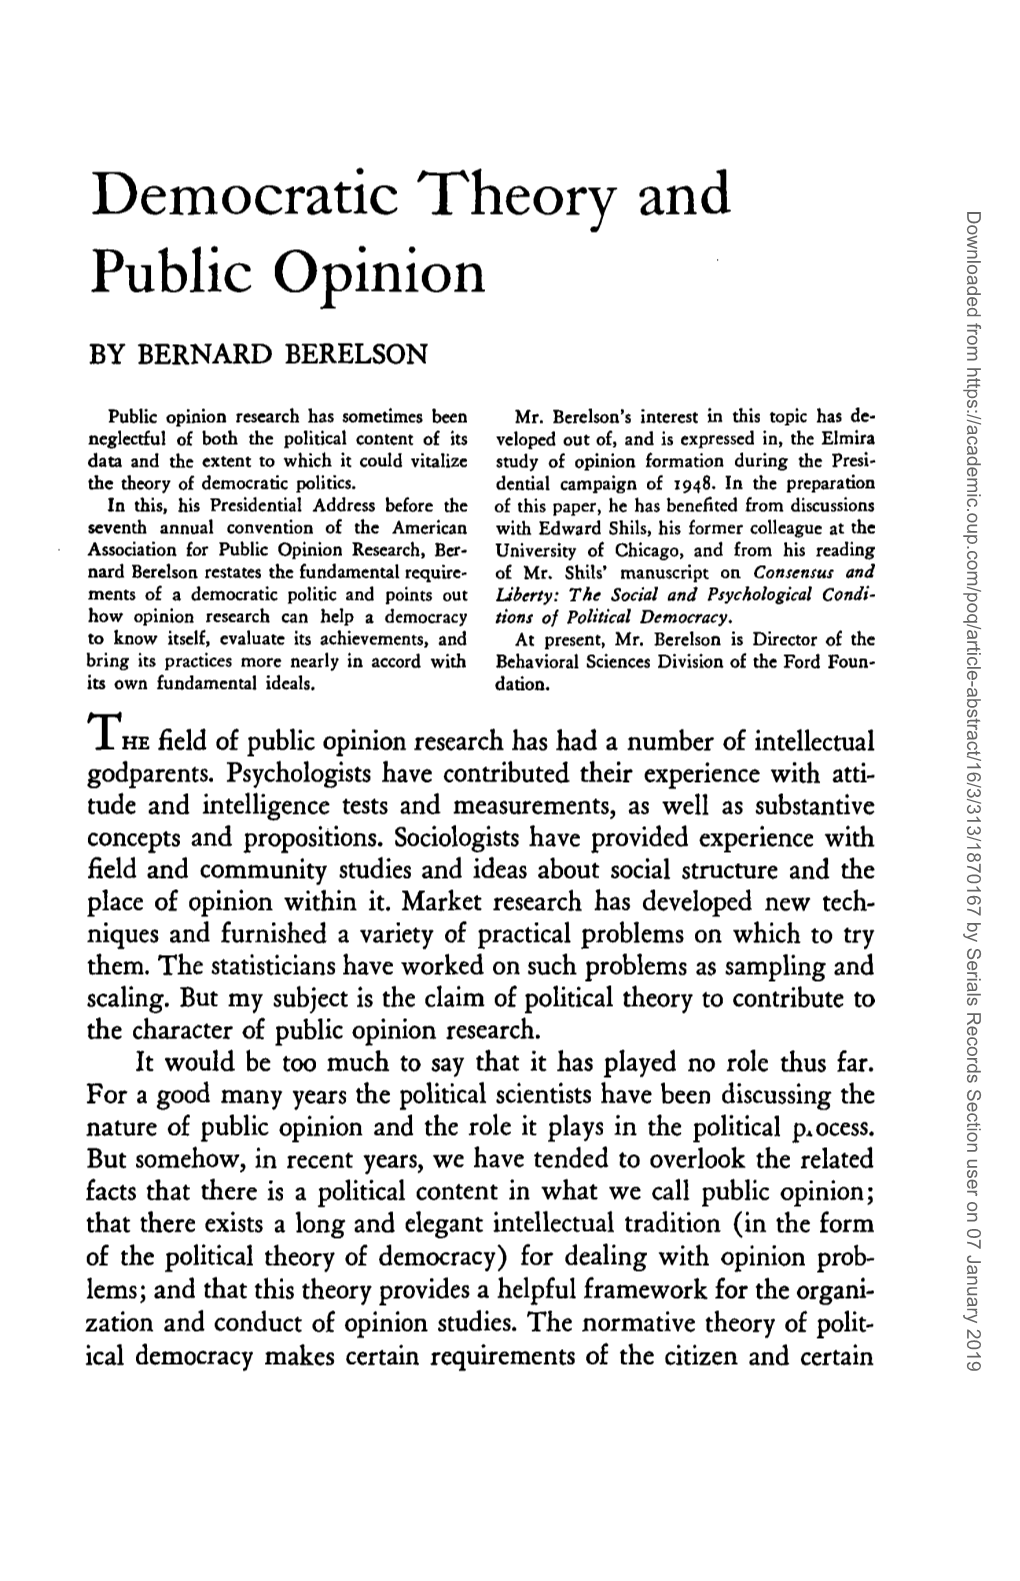 Berelson, Bernard. 1952. “Democratic Theory and Public Opinion.”